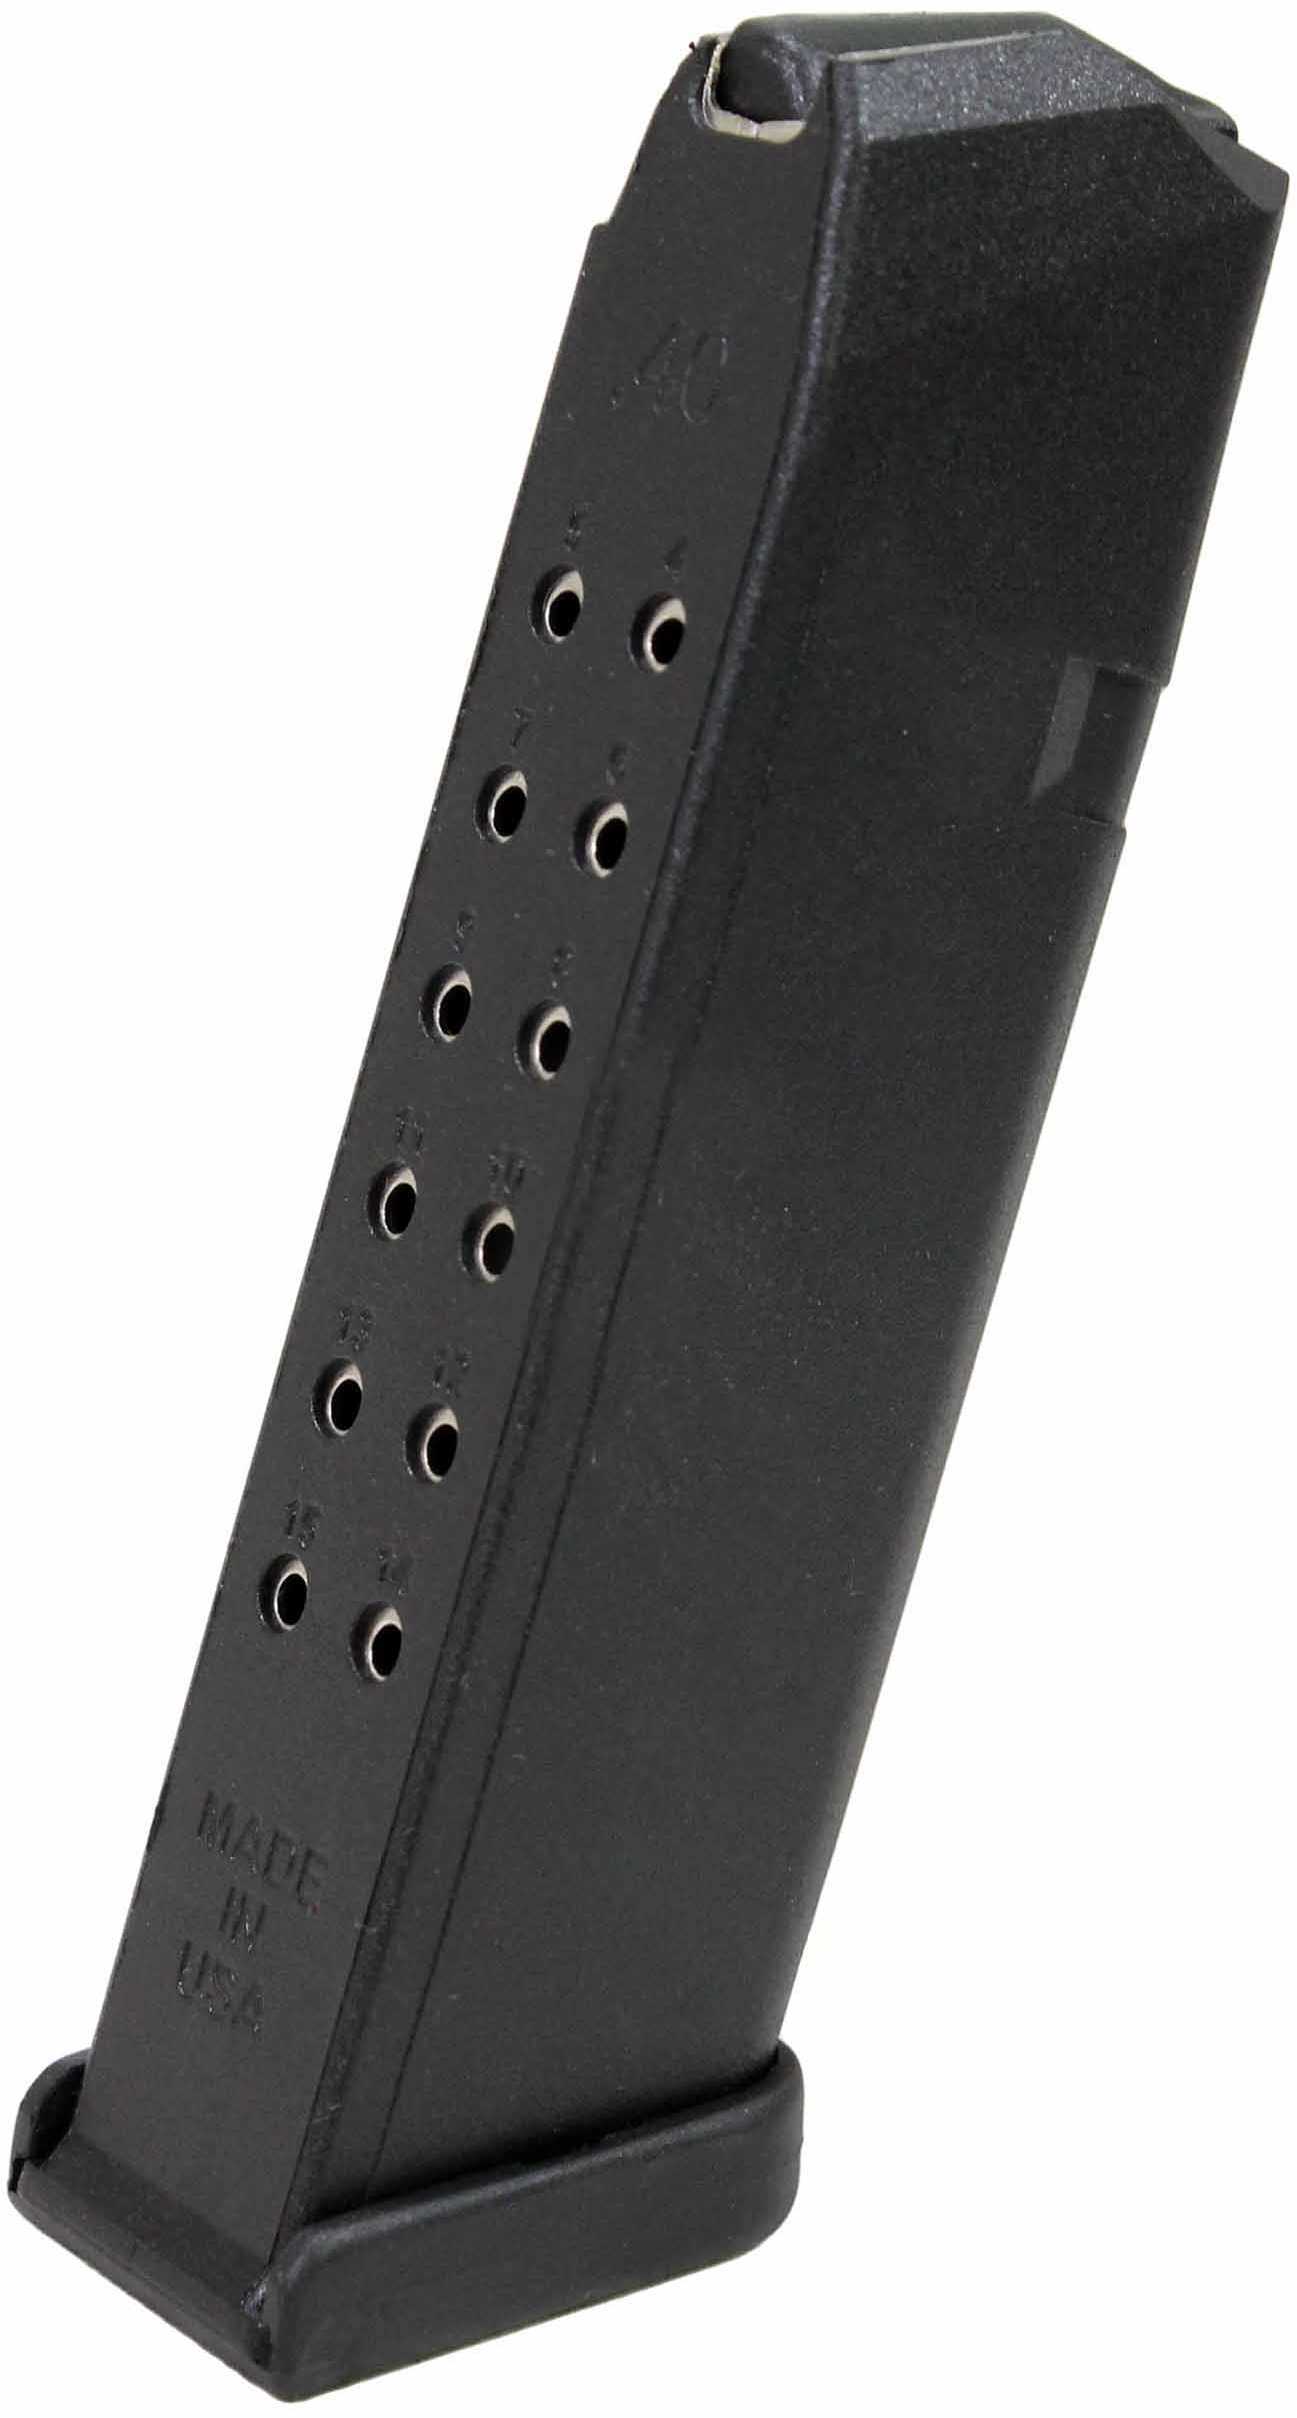 ProMag GLKA12 Replacement Magazine Fits Glock G22 40 S&W 15 Round Polymer Black Finish